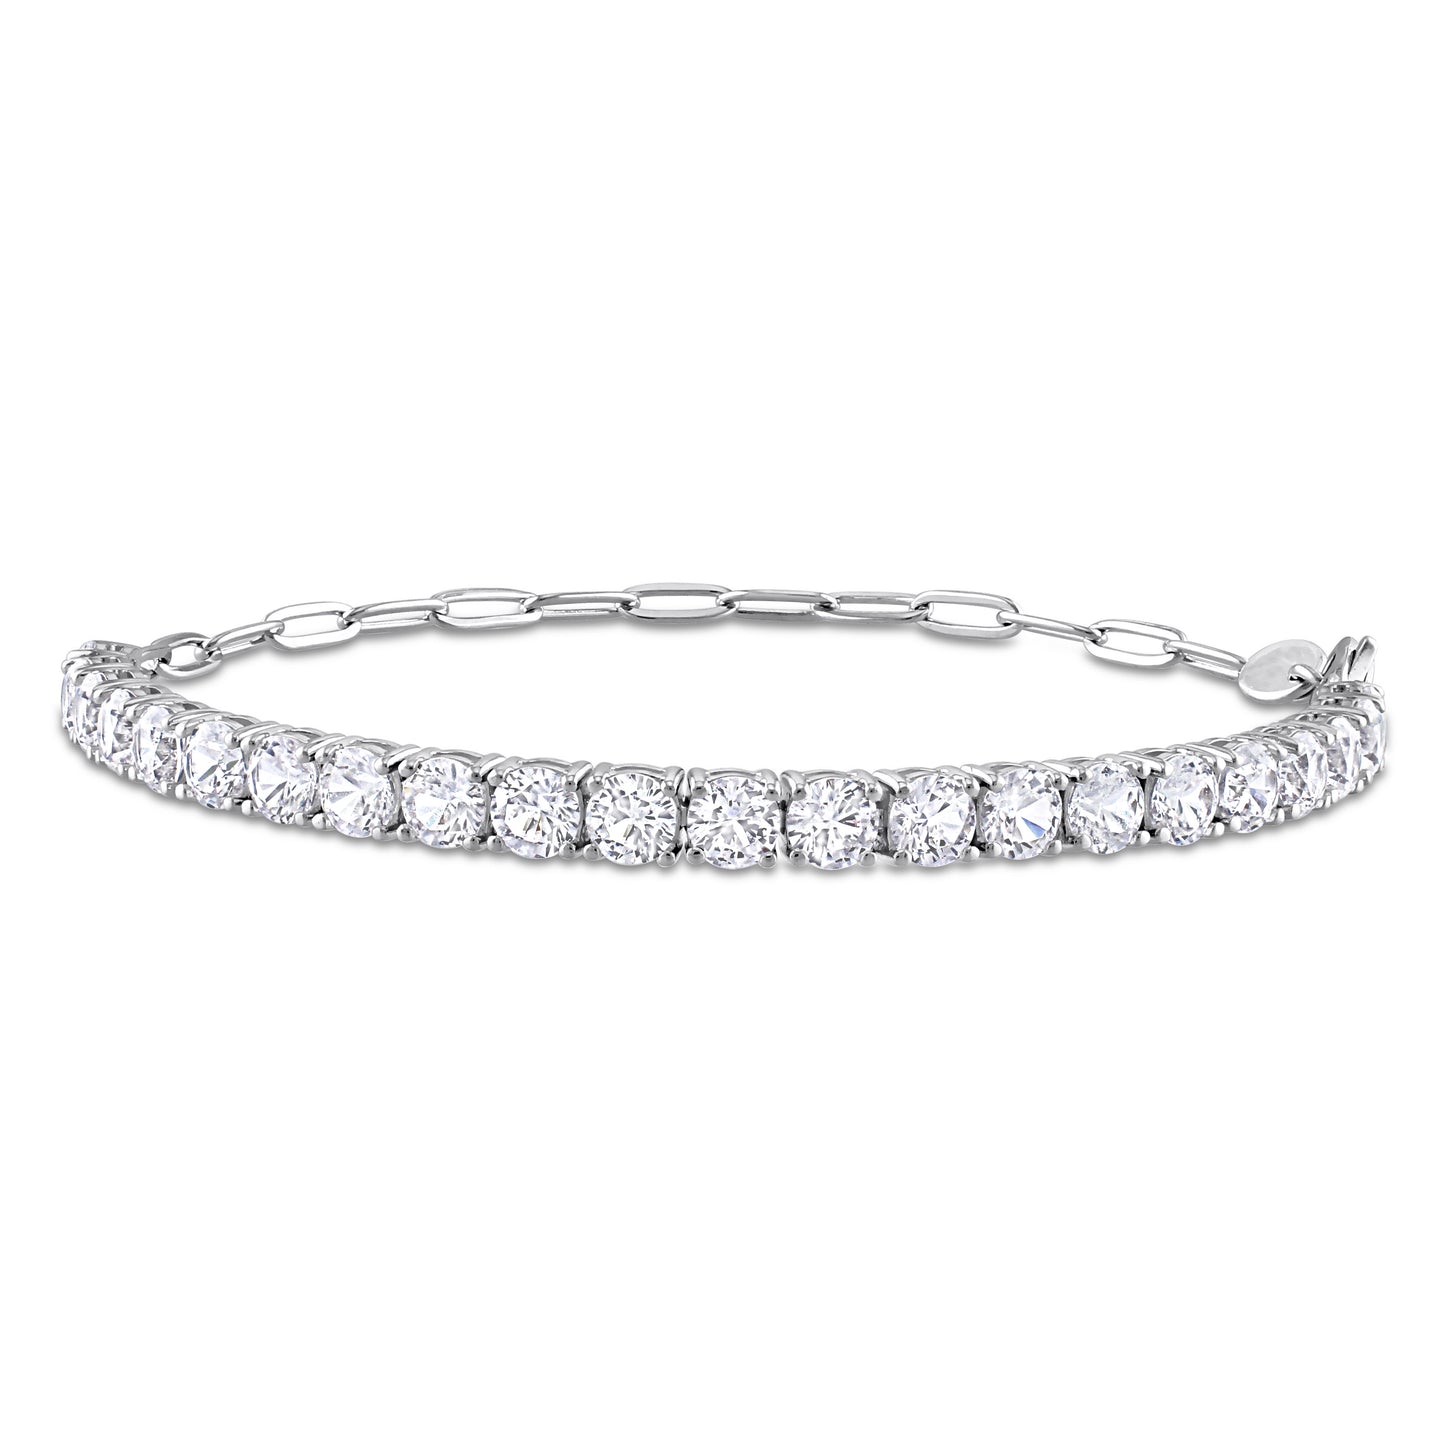 6 ct TGW Created white sapphire bracelet silver